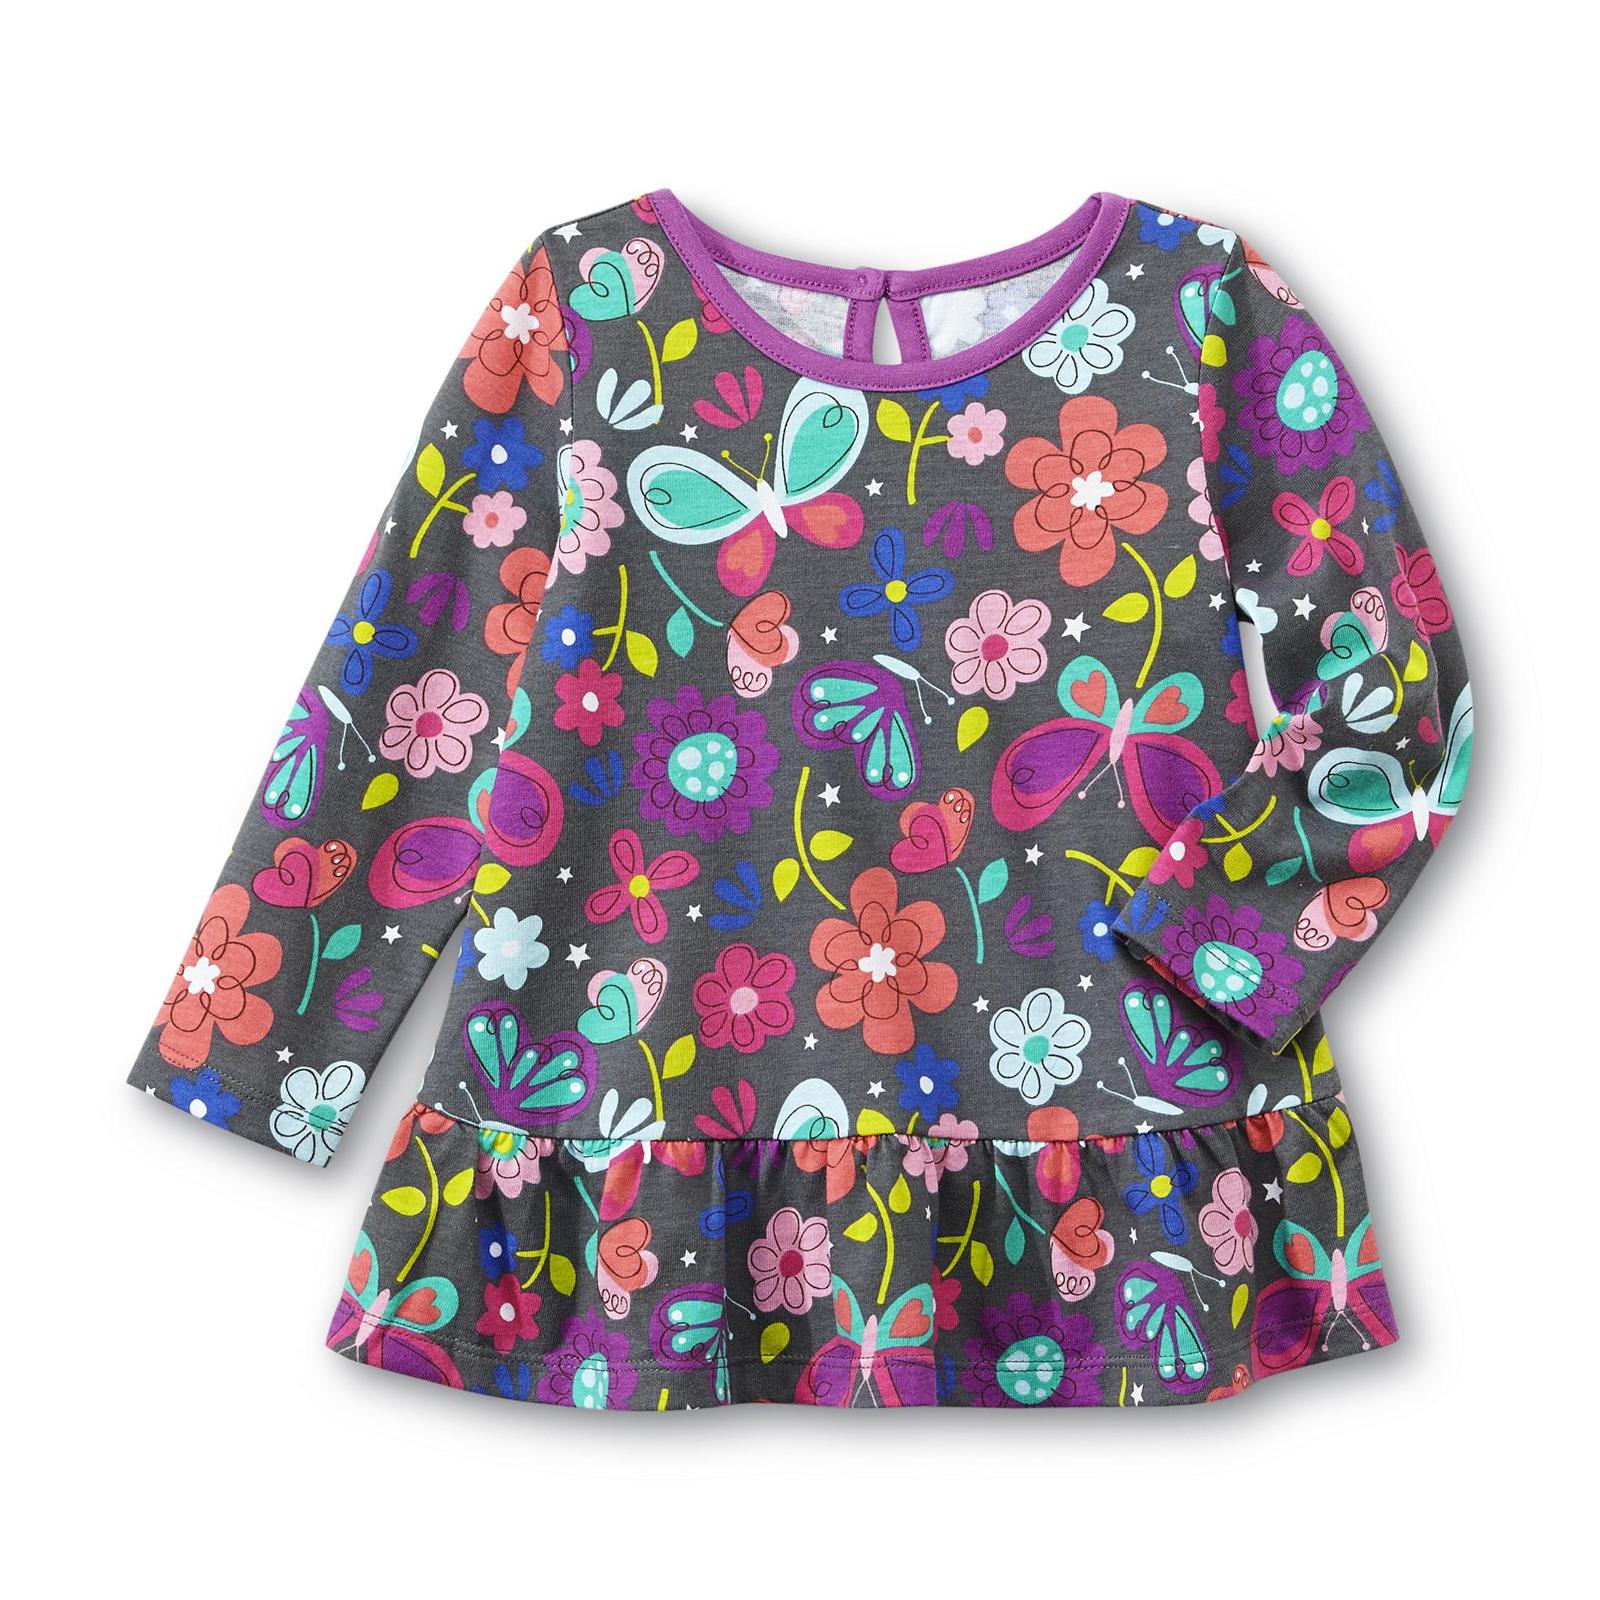 WonderKids Infant & Toddler Girl's Long-Sleeve Peplum Top - Butterfly